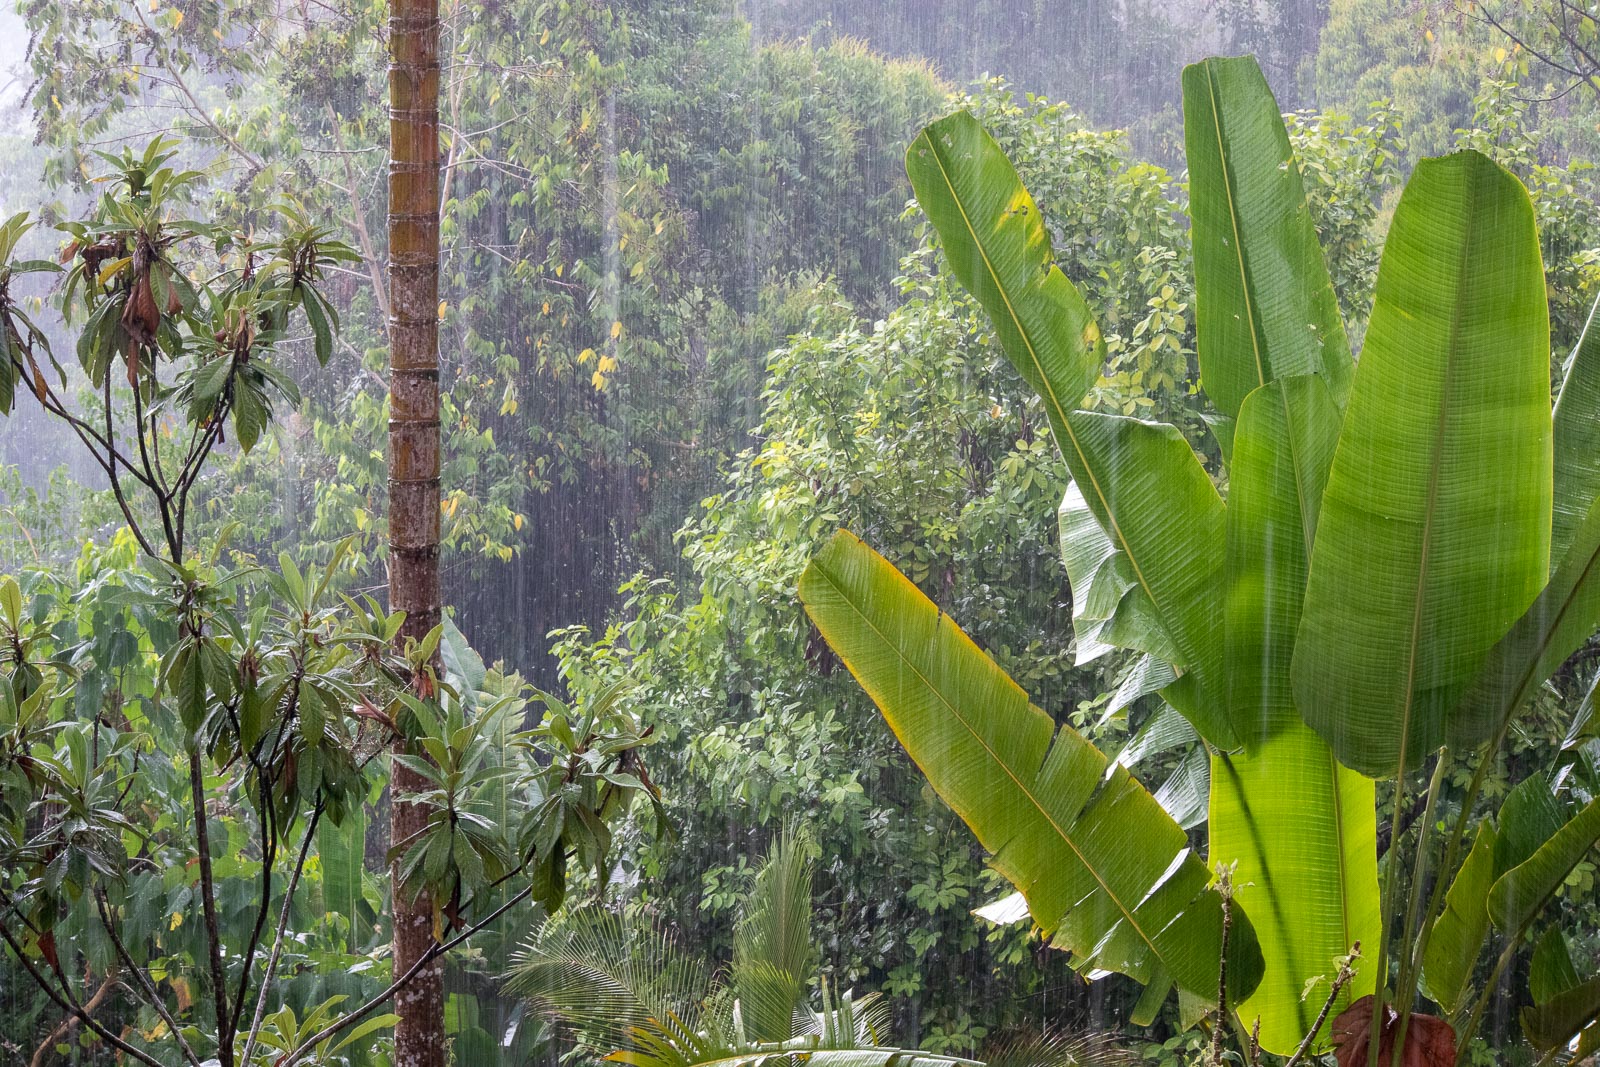 Rain Shower at the Costa Rican Spice Farm